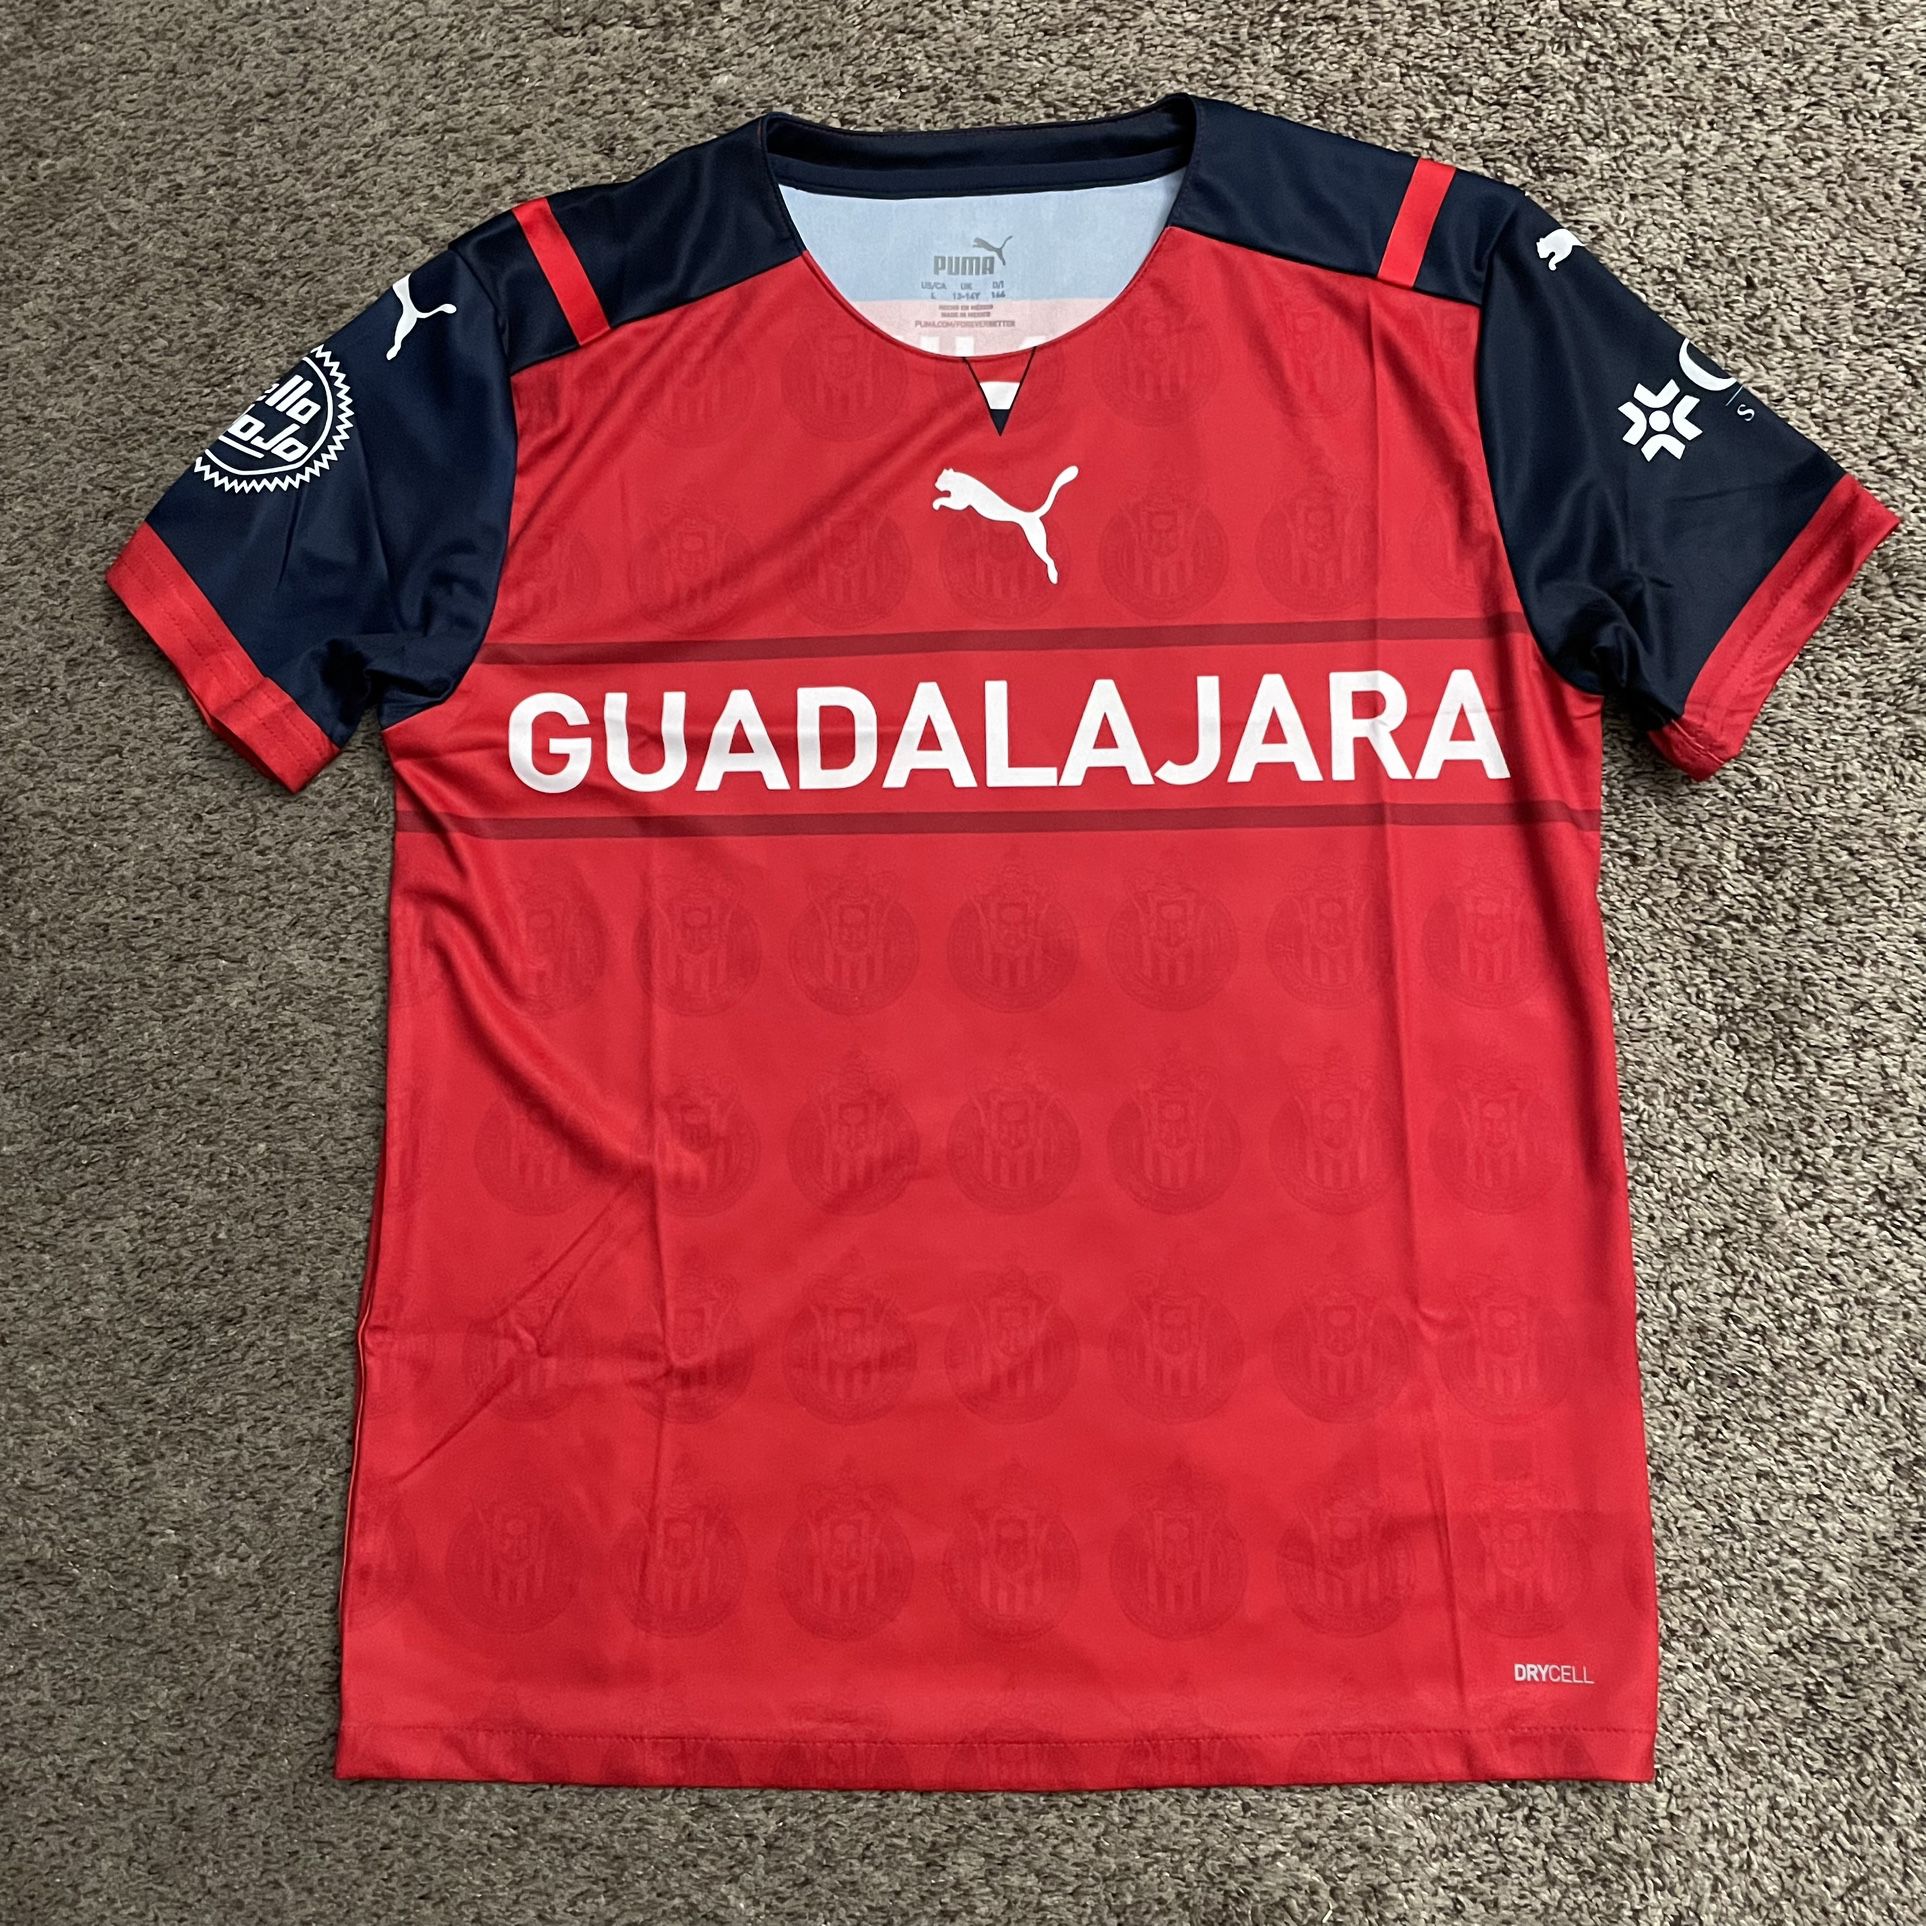 Puma Chivas Guadalajara Liga Mx Home Dry Cell Soccer Jersey Youth 